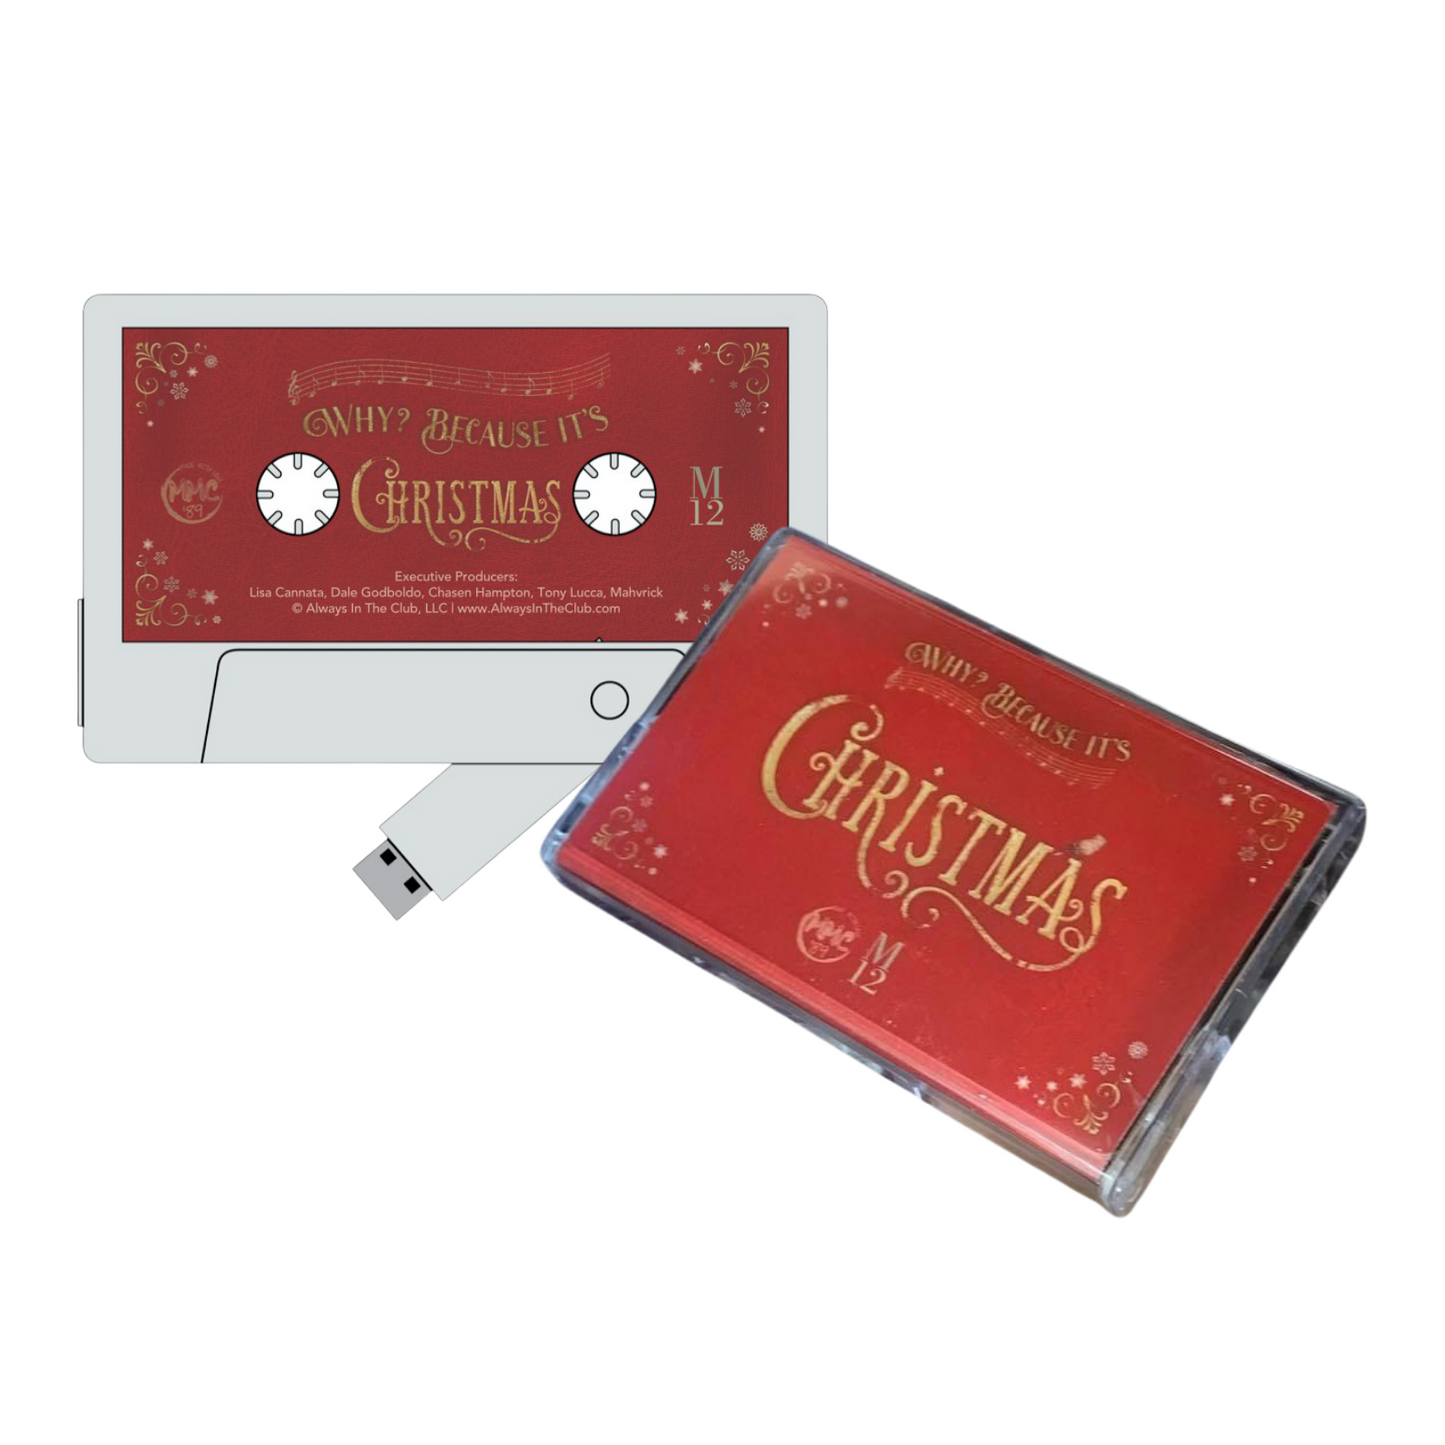 BUNDLE: Limited 2nd Run Commemorative CD + USB Cassette (Pre-order Bundle)